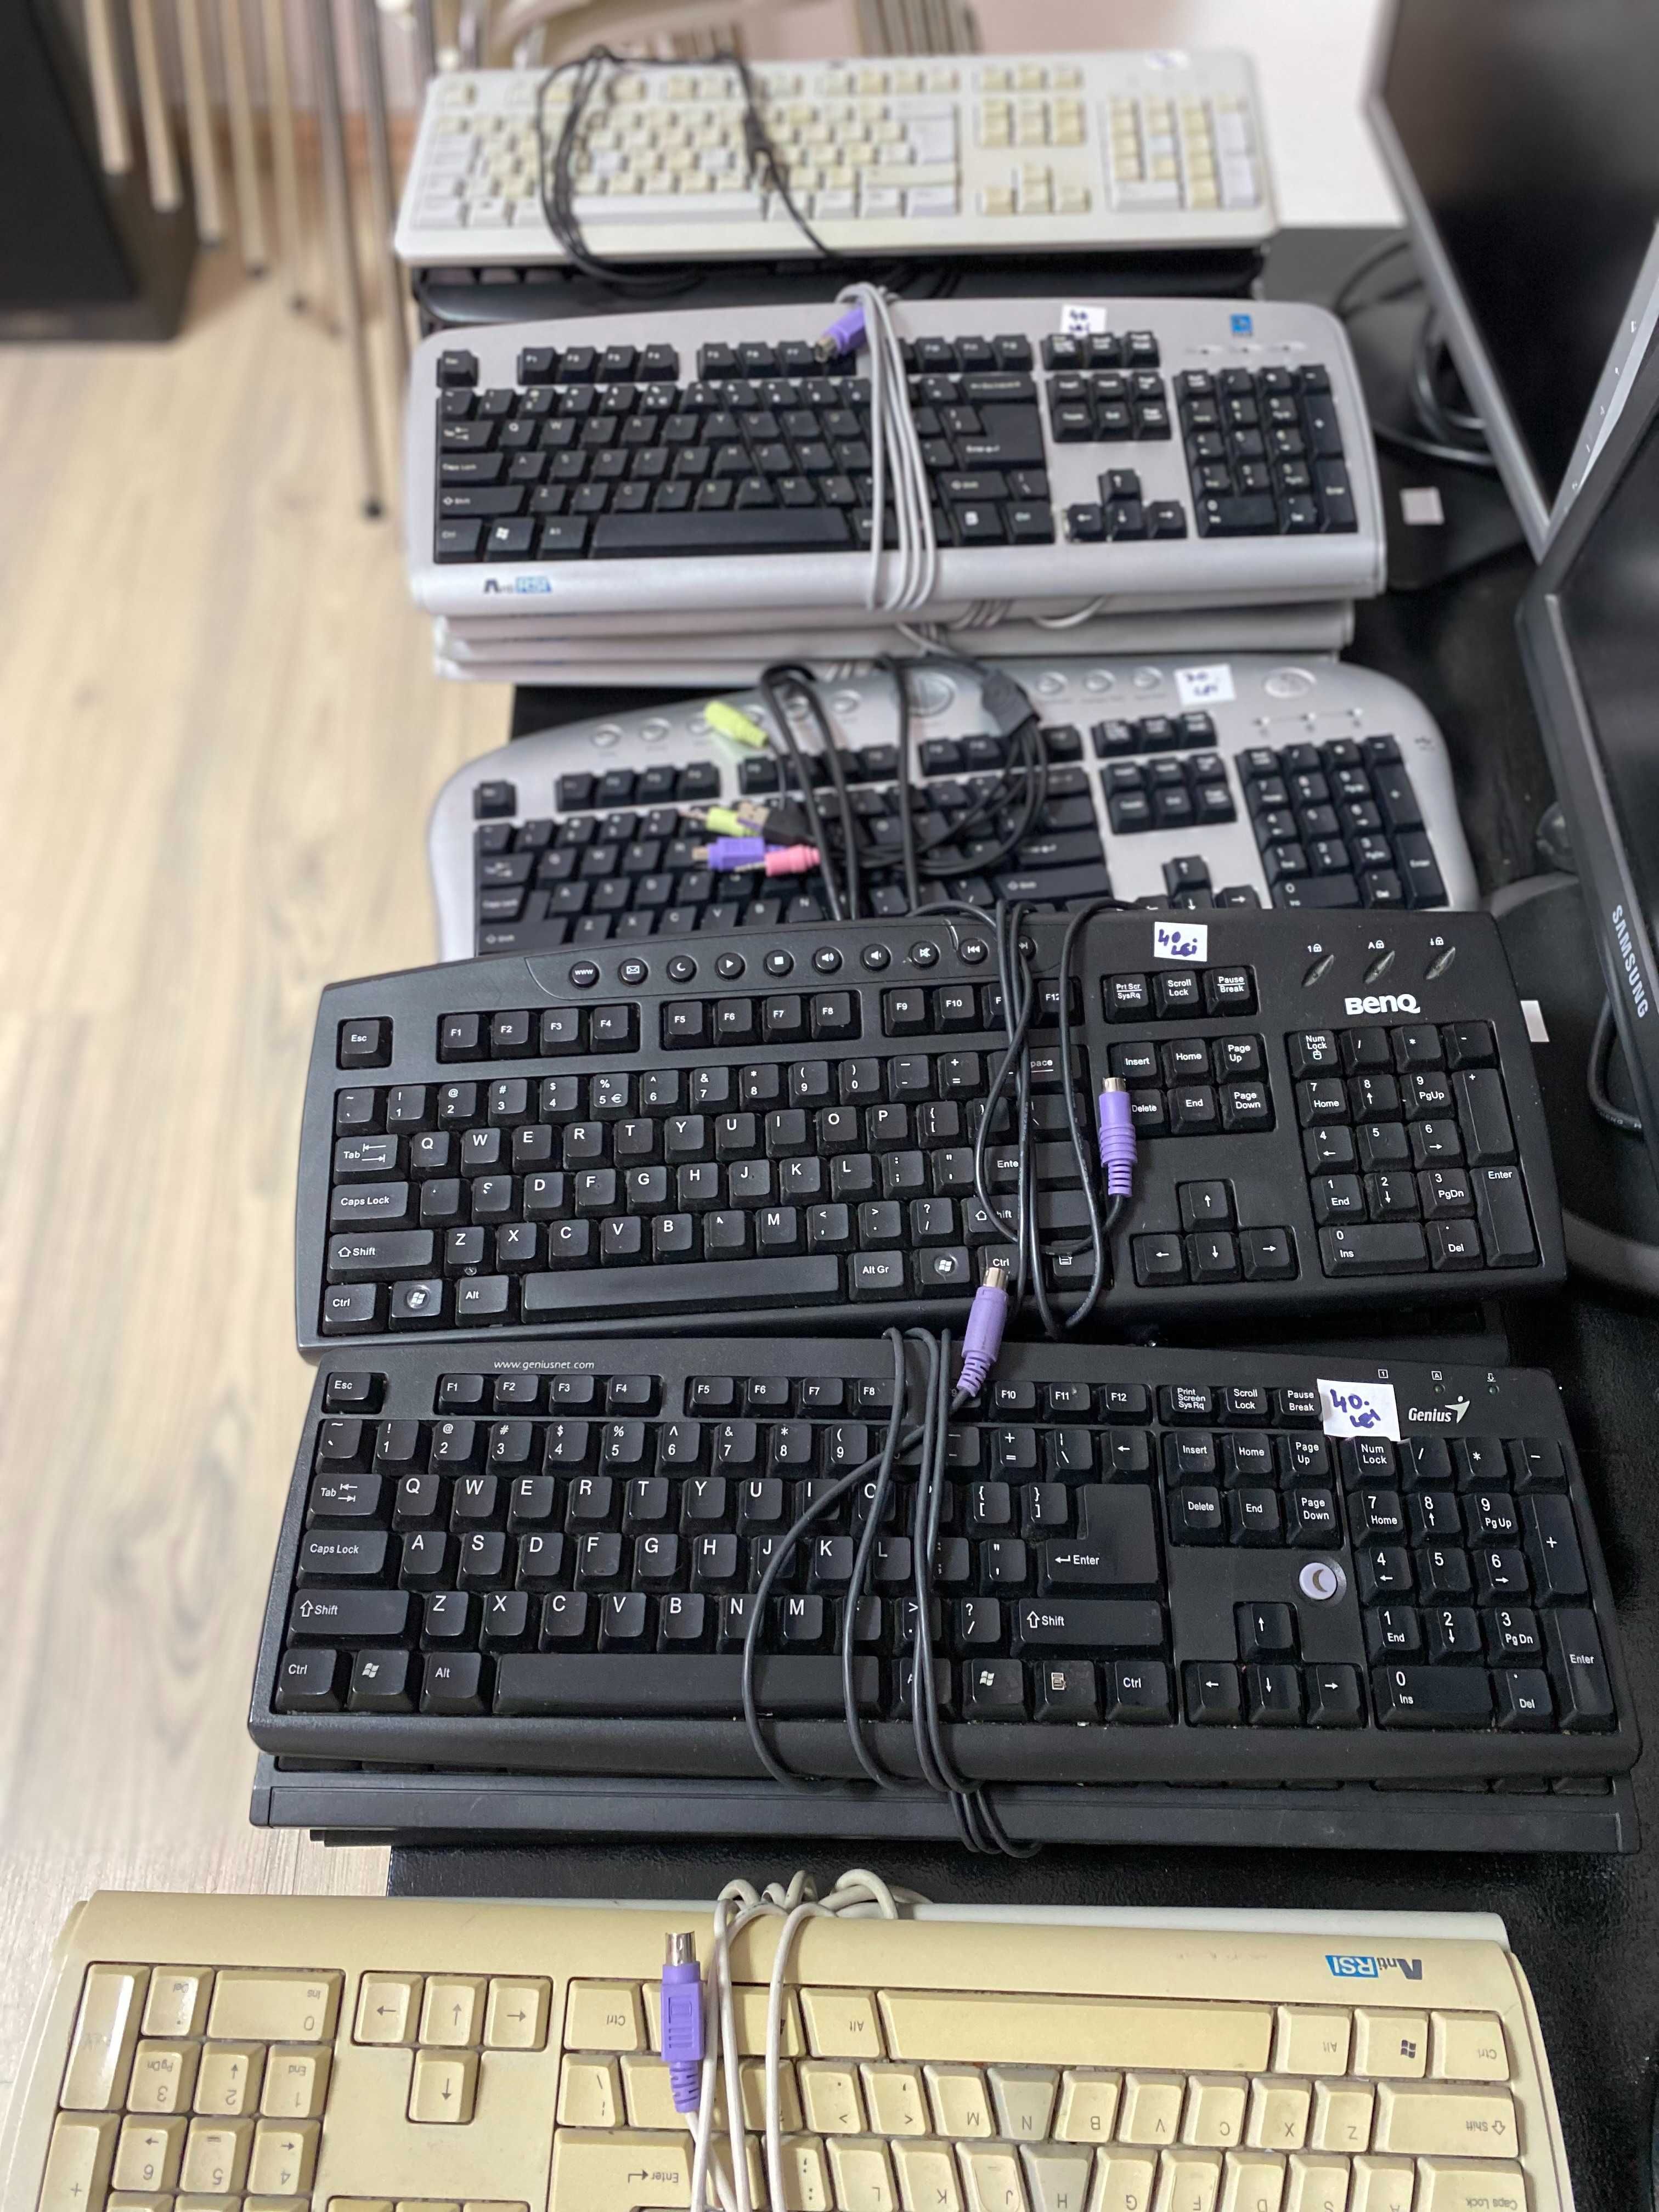 Tastaturi diverse modele